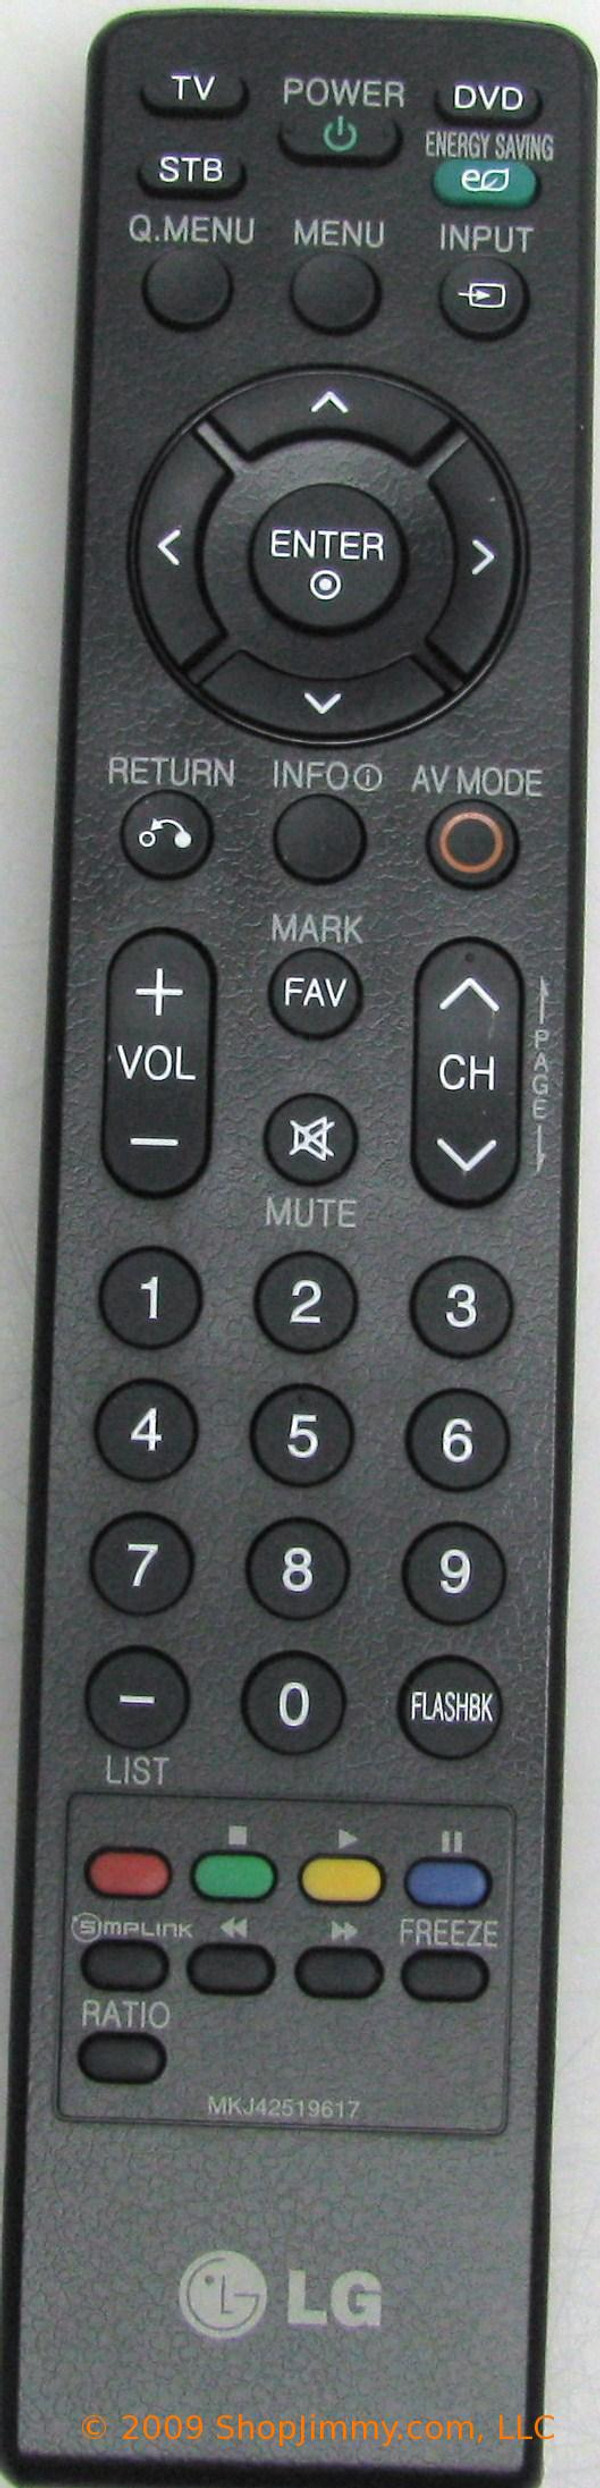 LG MKJ42519617 Remote Control